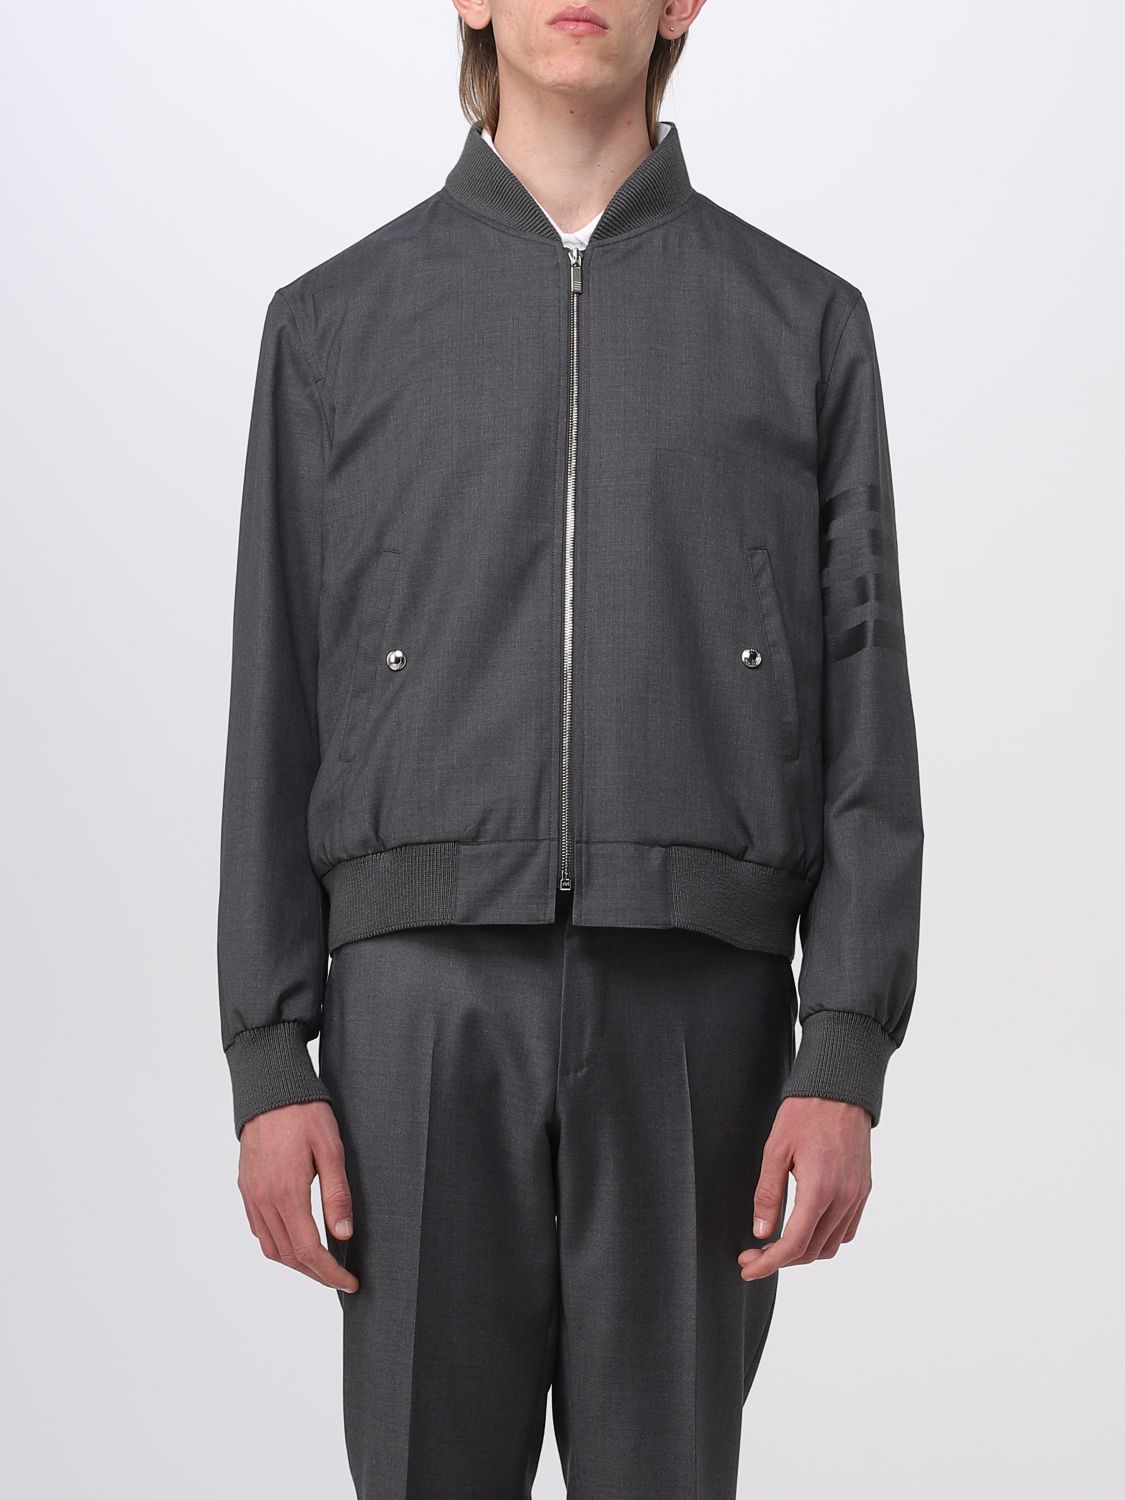 Thom Browne jacket for man